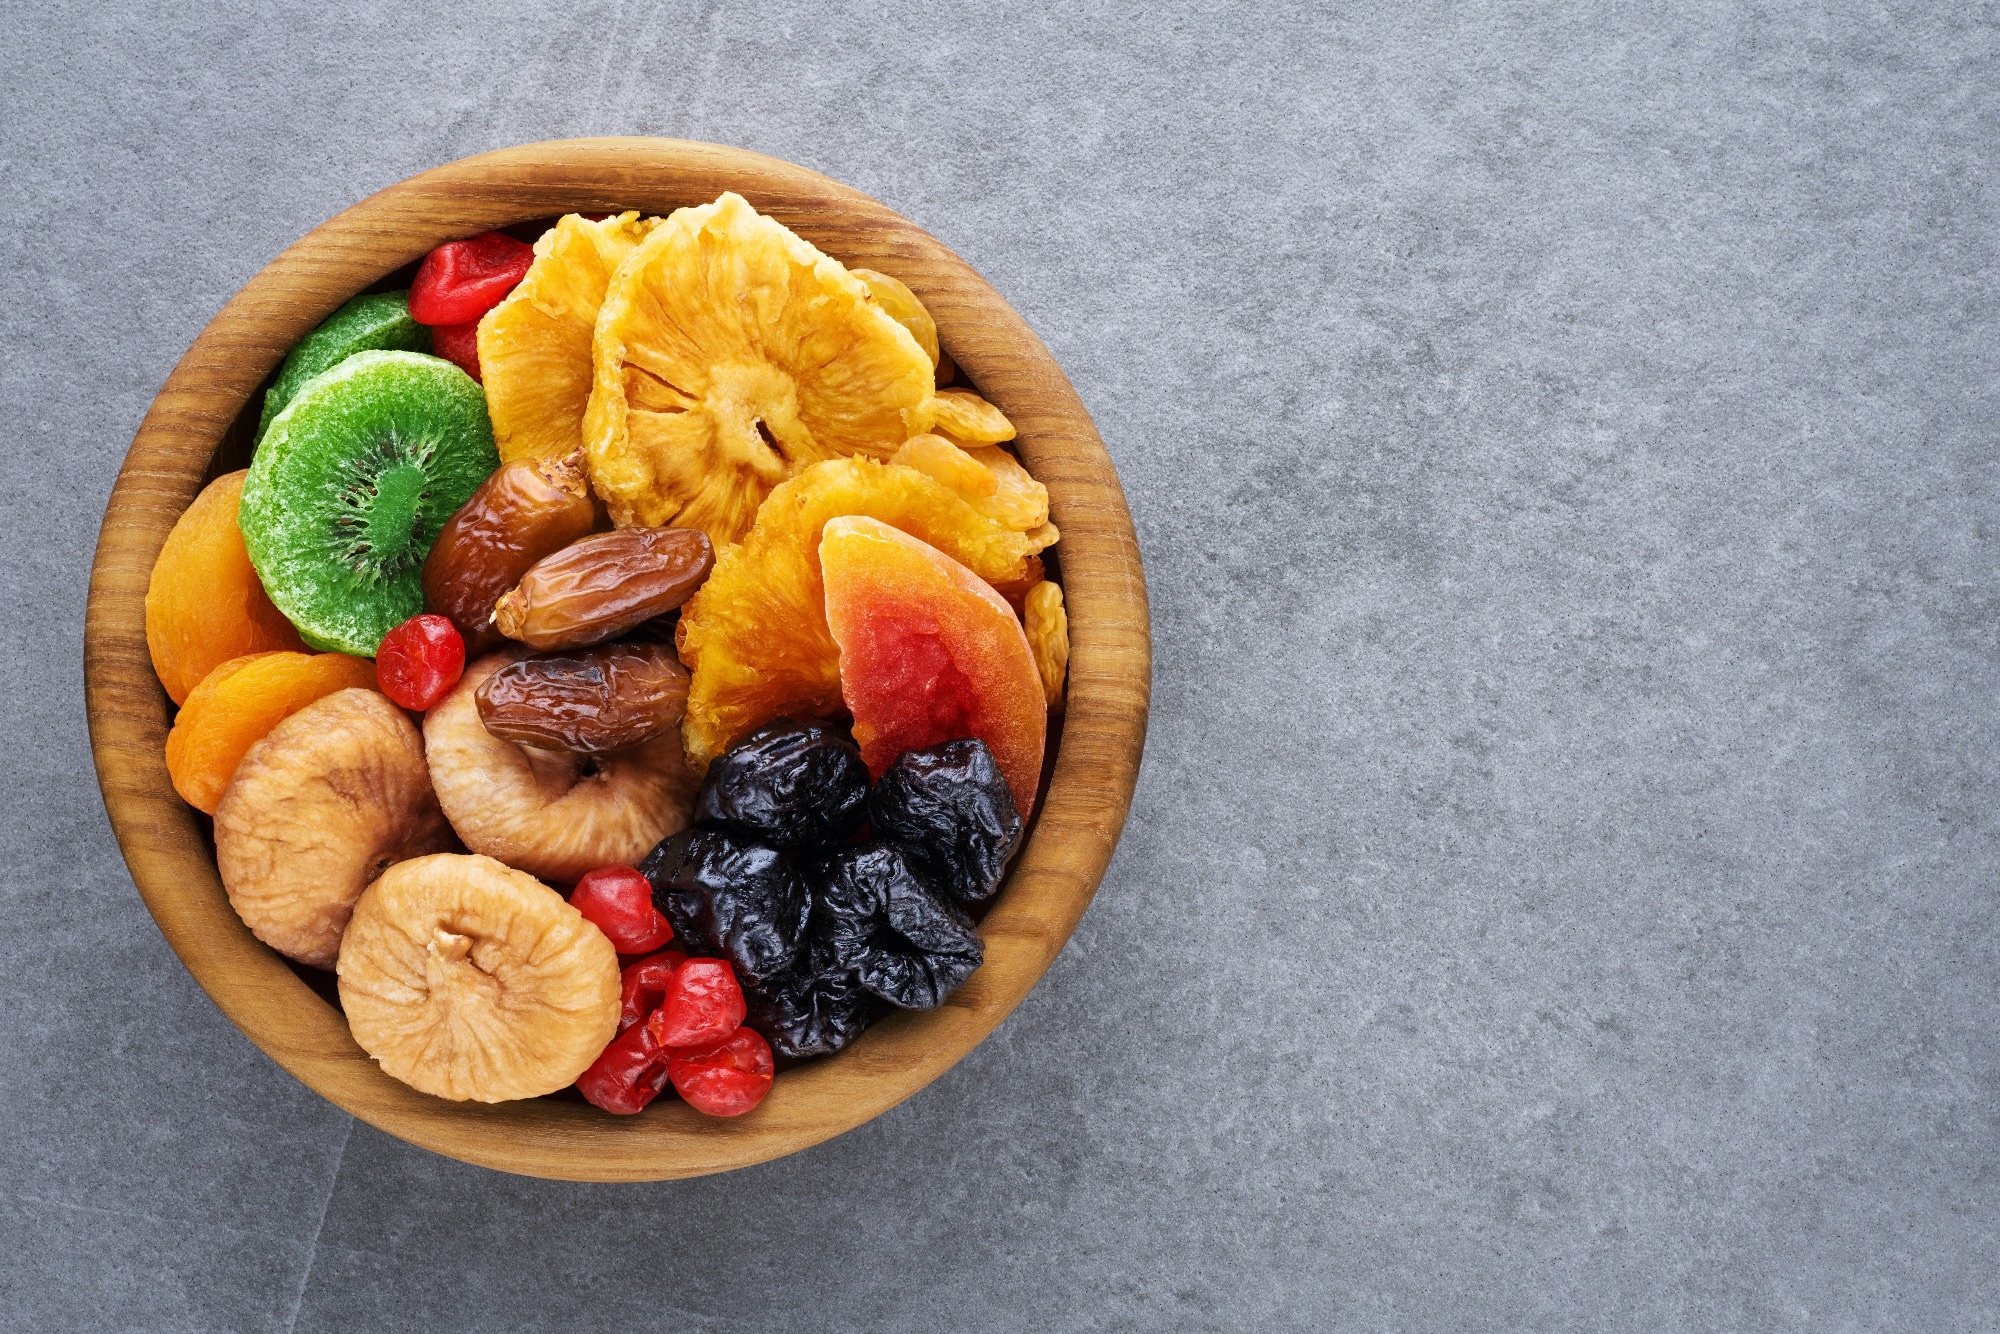 Study: Causal association between dried fruit intake and risk of osteoarthritis: A Mendelian randomization study. Image Credit: vitals/Shutterstock.com